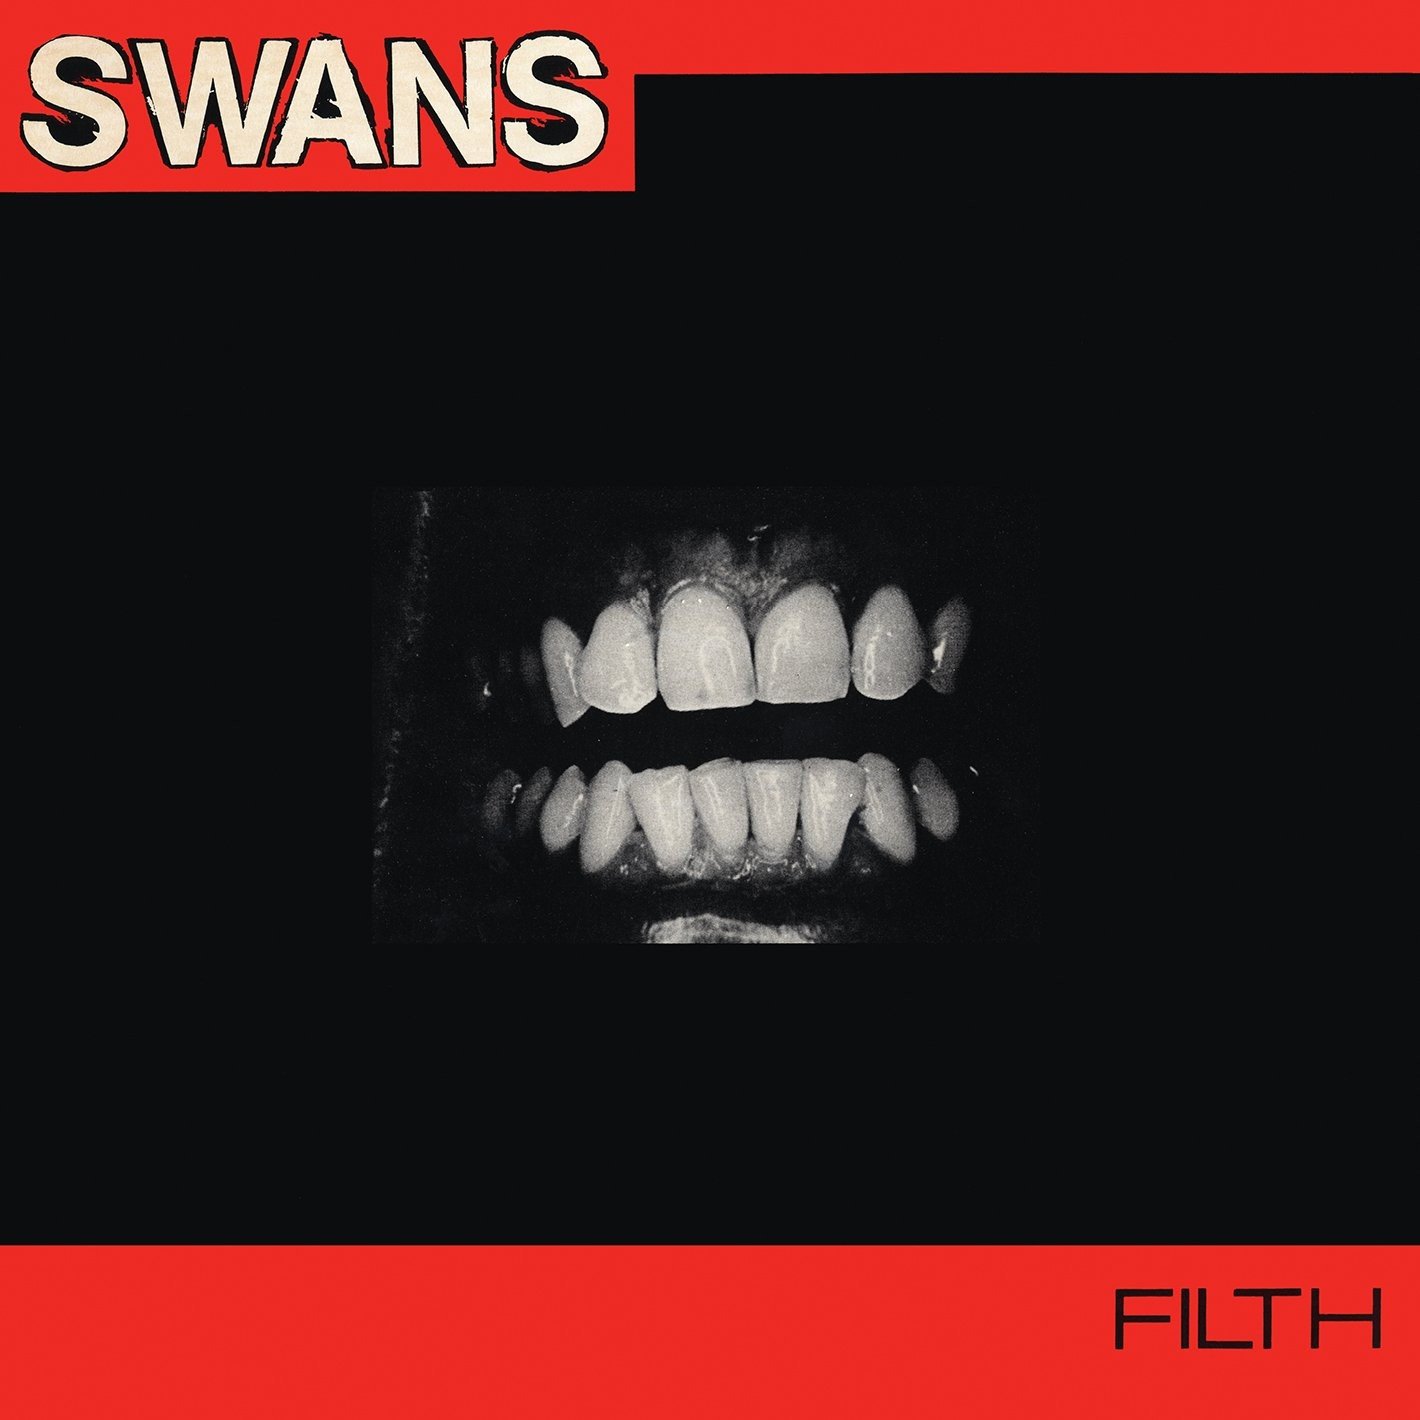 Read more about the article Godišnjica objavljivanja albuma Filth noise-eksperimentalnog benda Swans